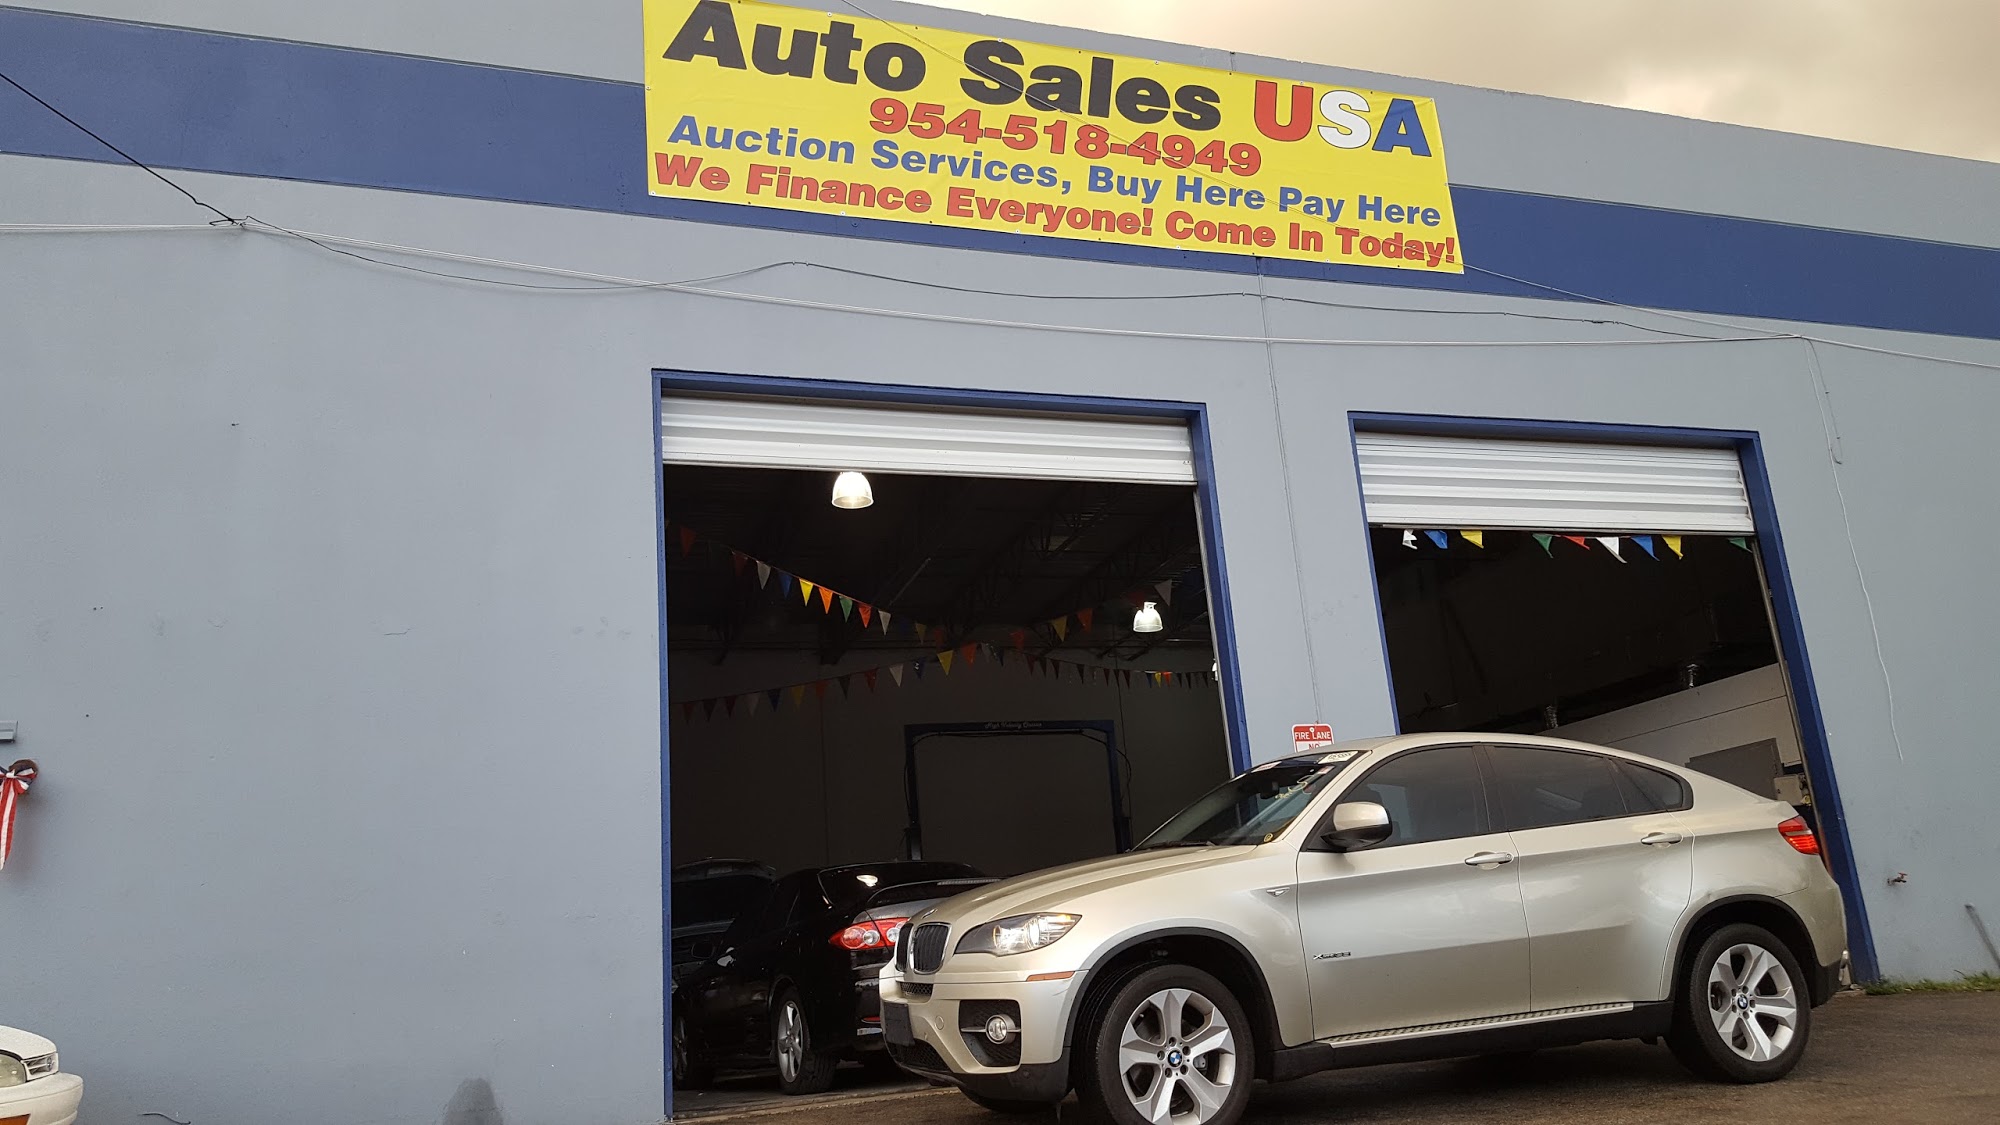 Auto Sales USA